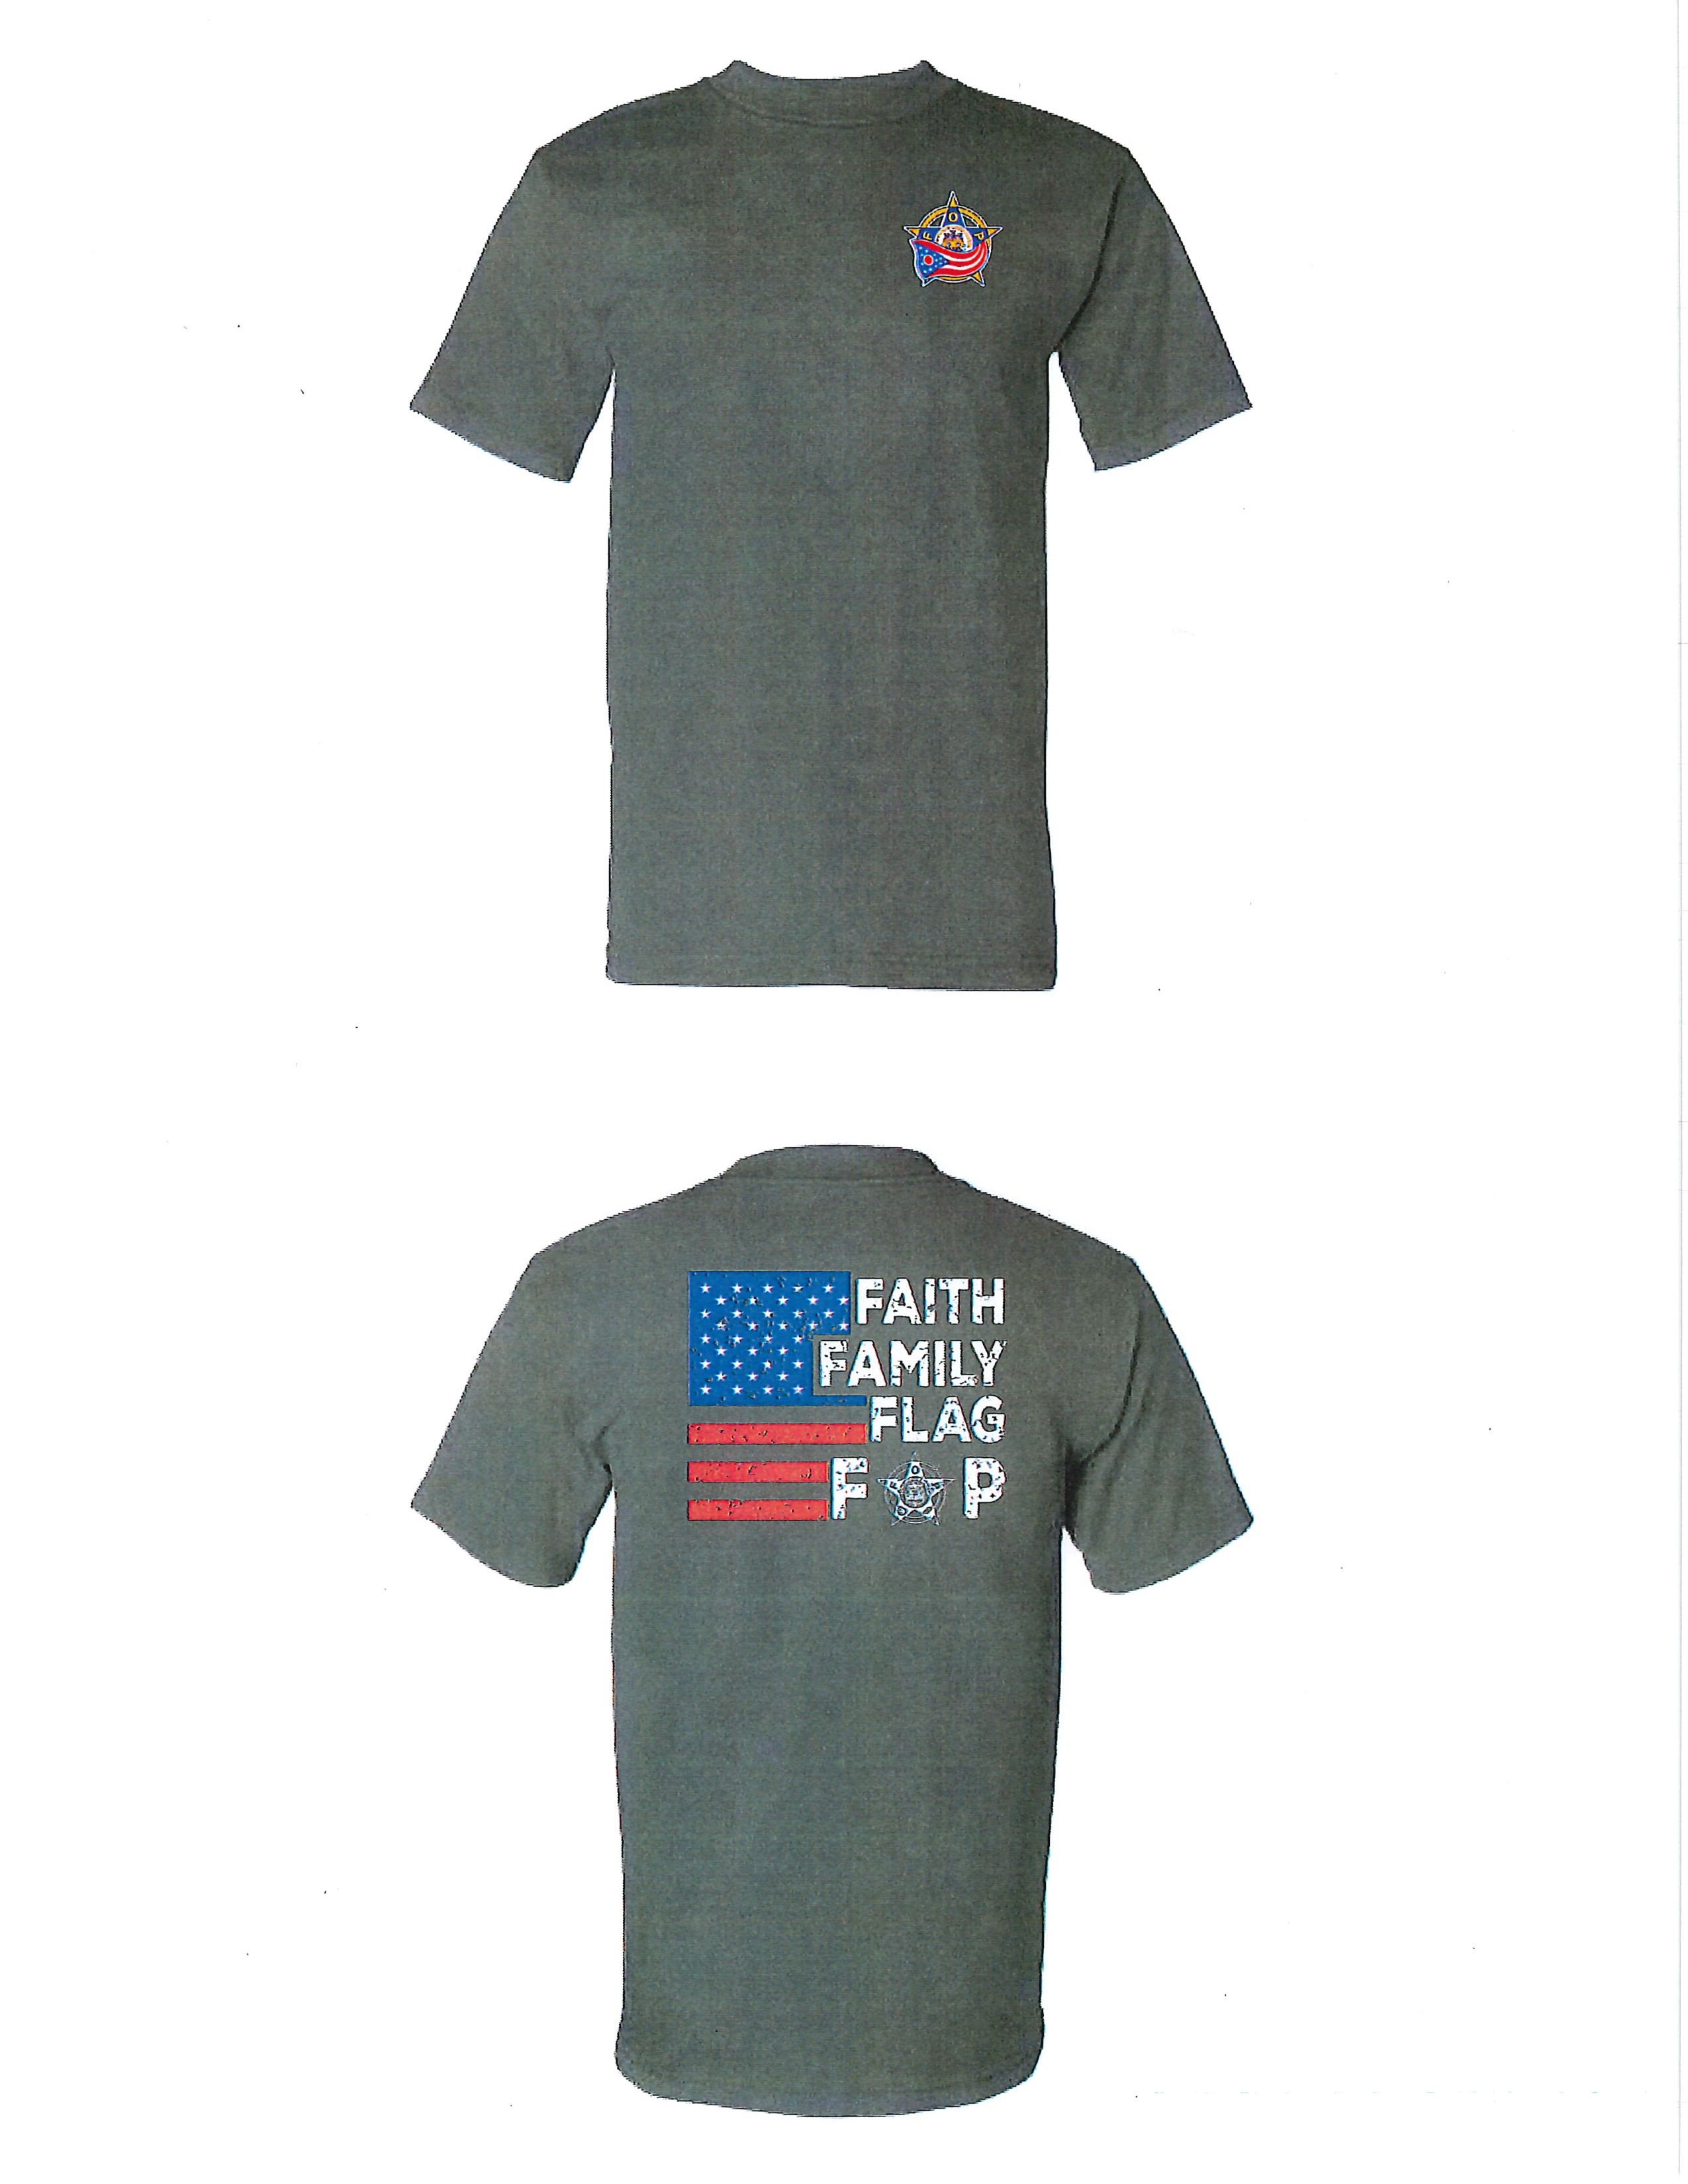 FOP of Ohio Foundation T-Shirt